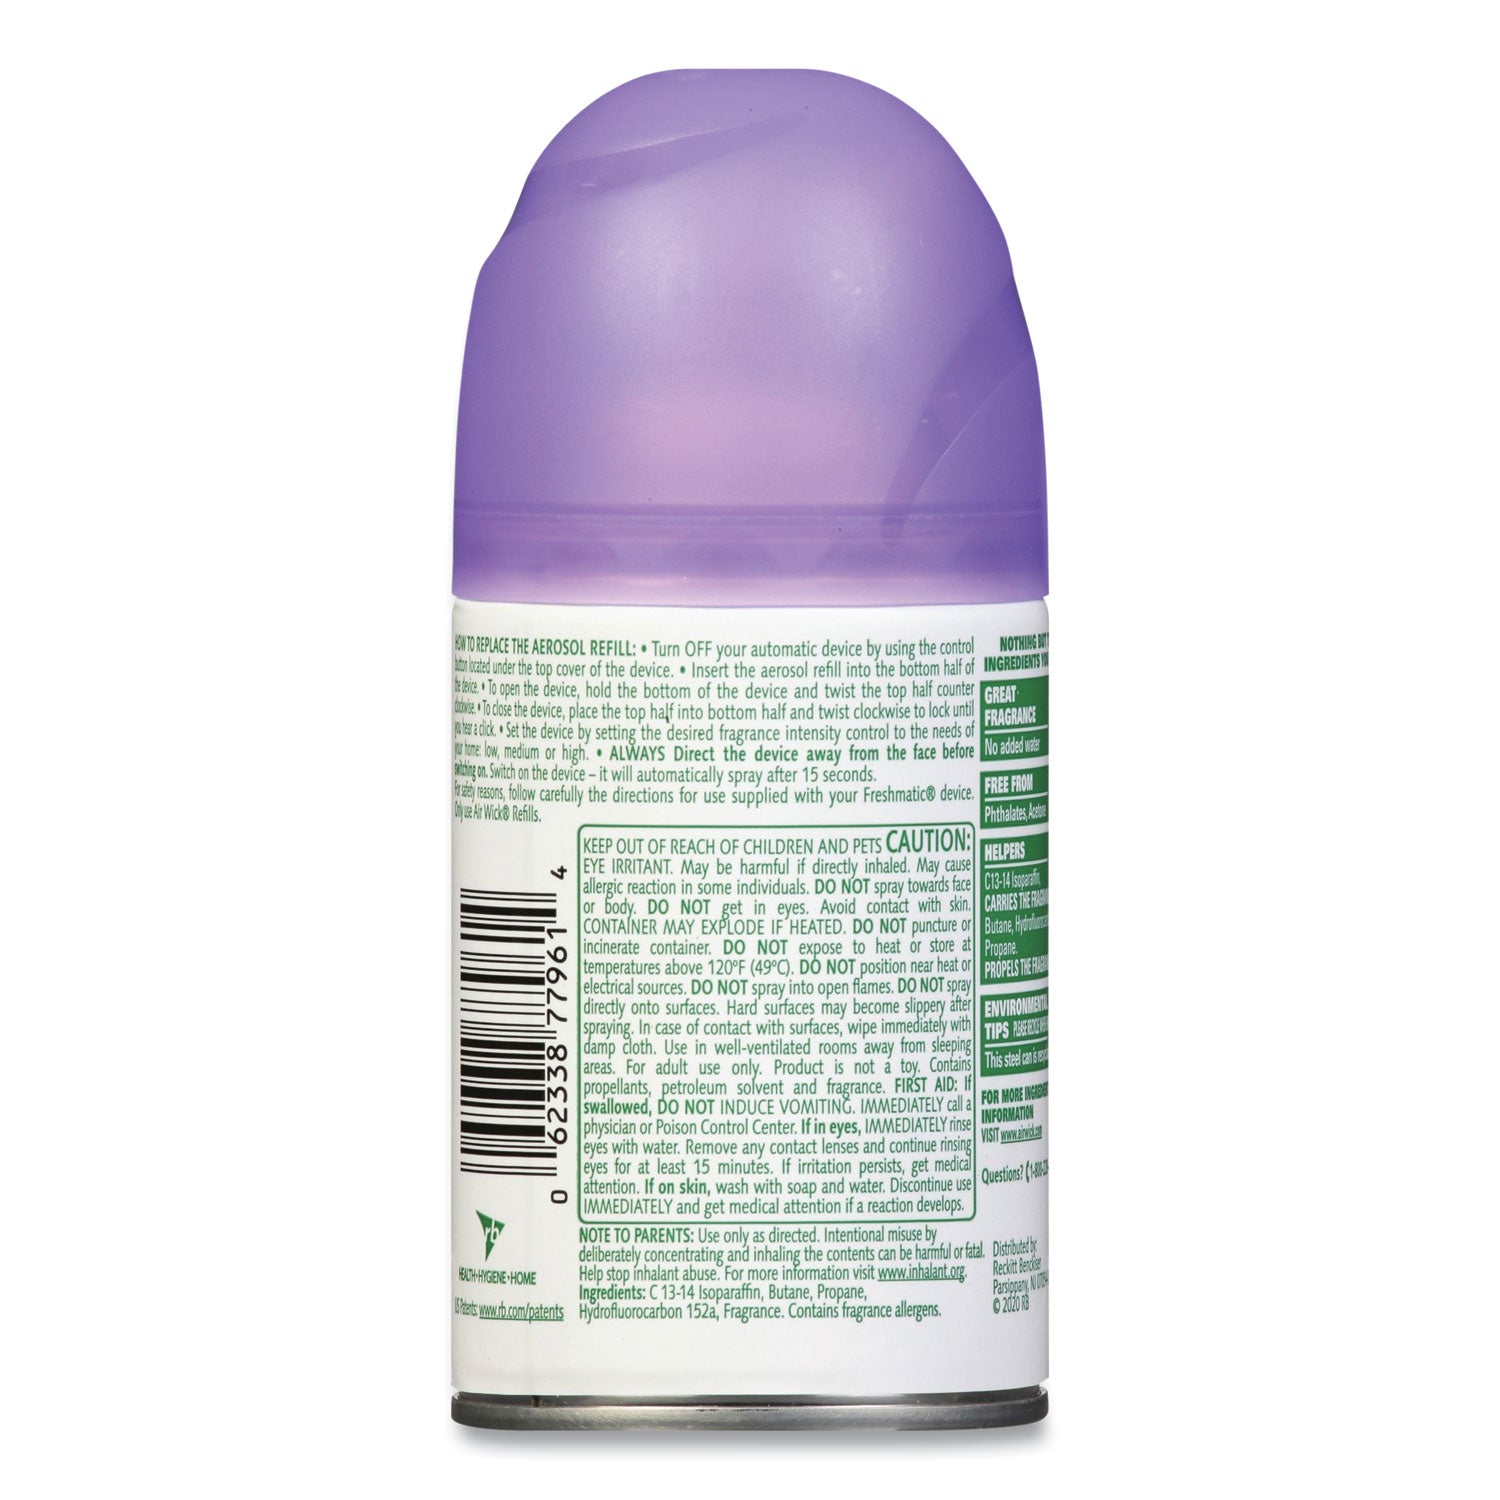 Freshmatic Ultra Automatic Spray Refill, Lavender/Chamomile, 5.89 oz Aerosol Spray - 